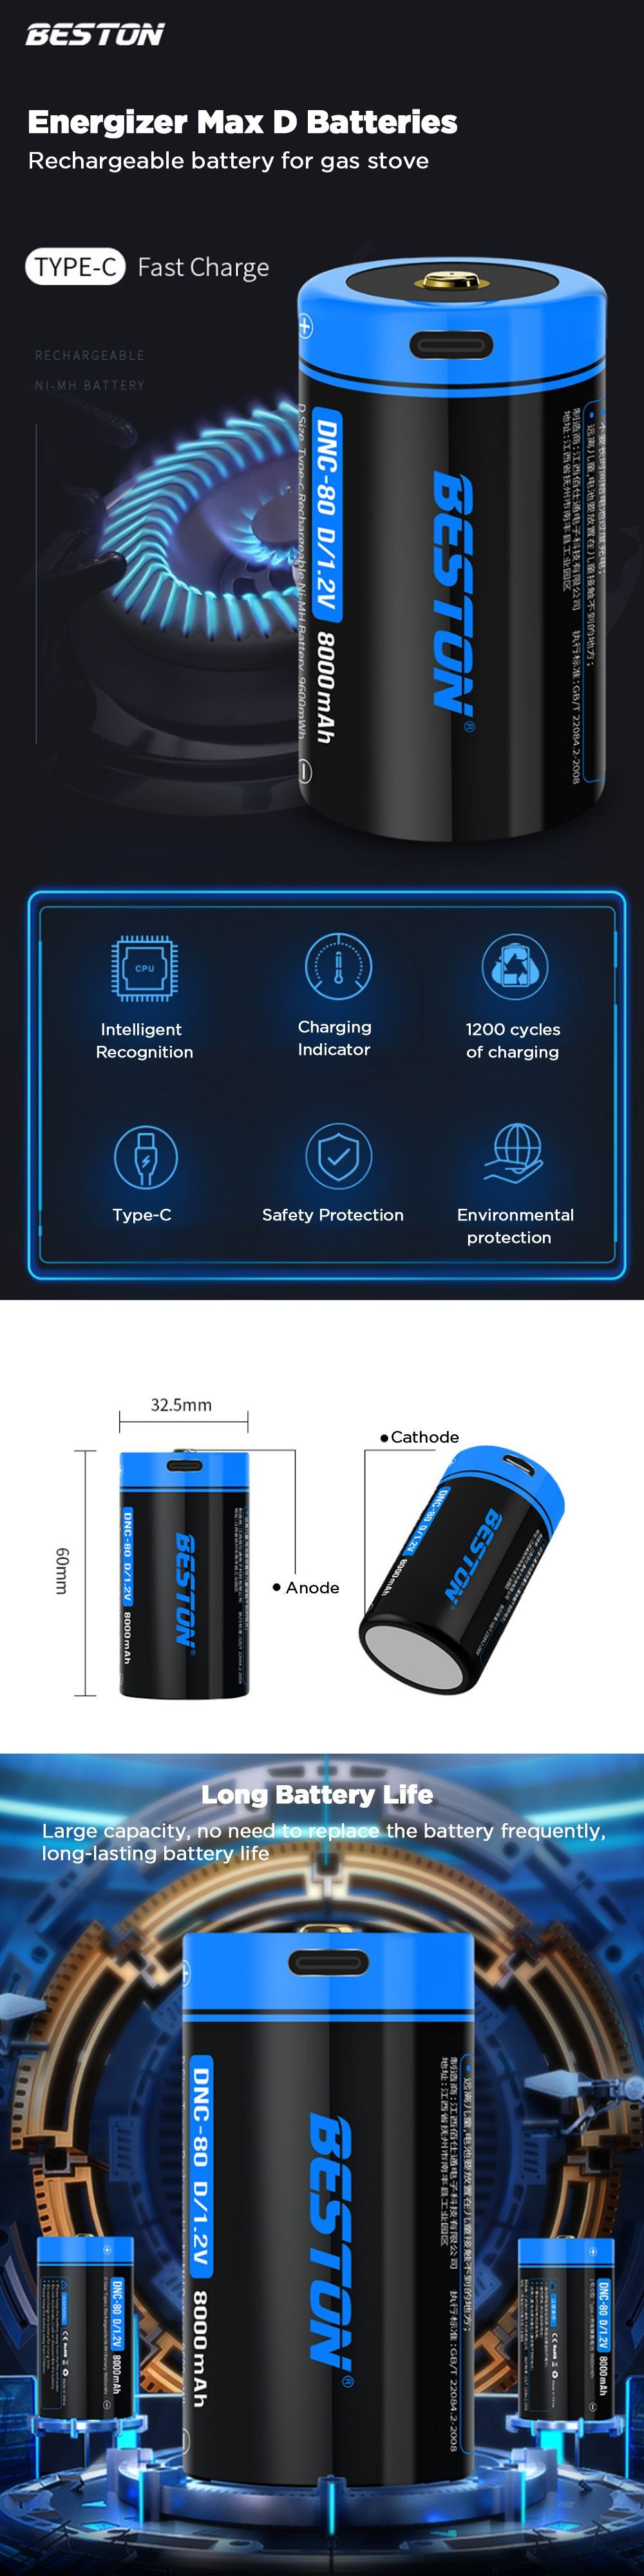 BESTON-12AV-8000mAh-Energizer-Max-D-Batteries-USB-Rechargeable-Six-Protections-Alkaline-D-Cell-Batte-1733953